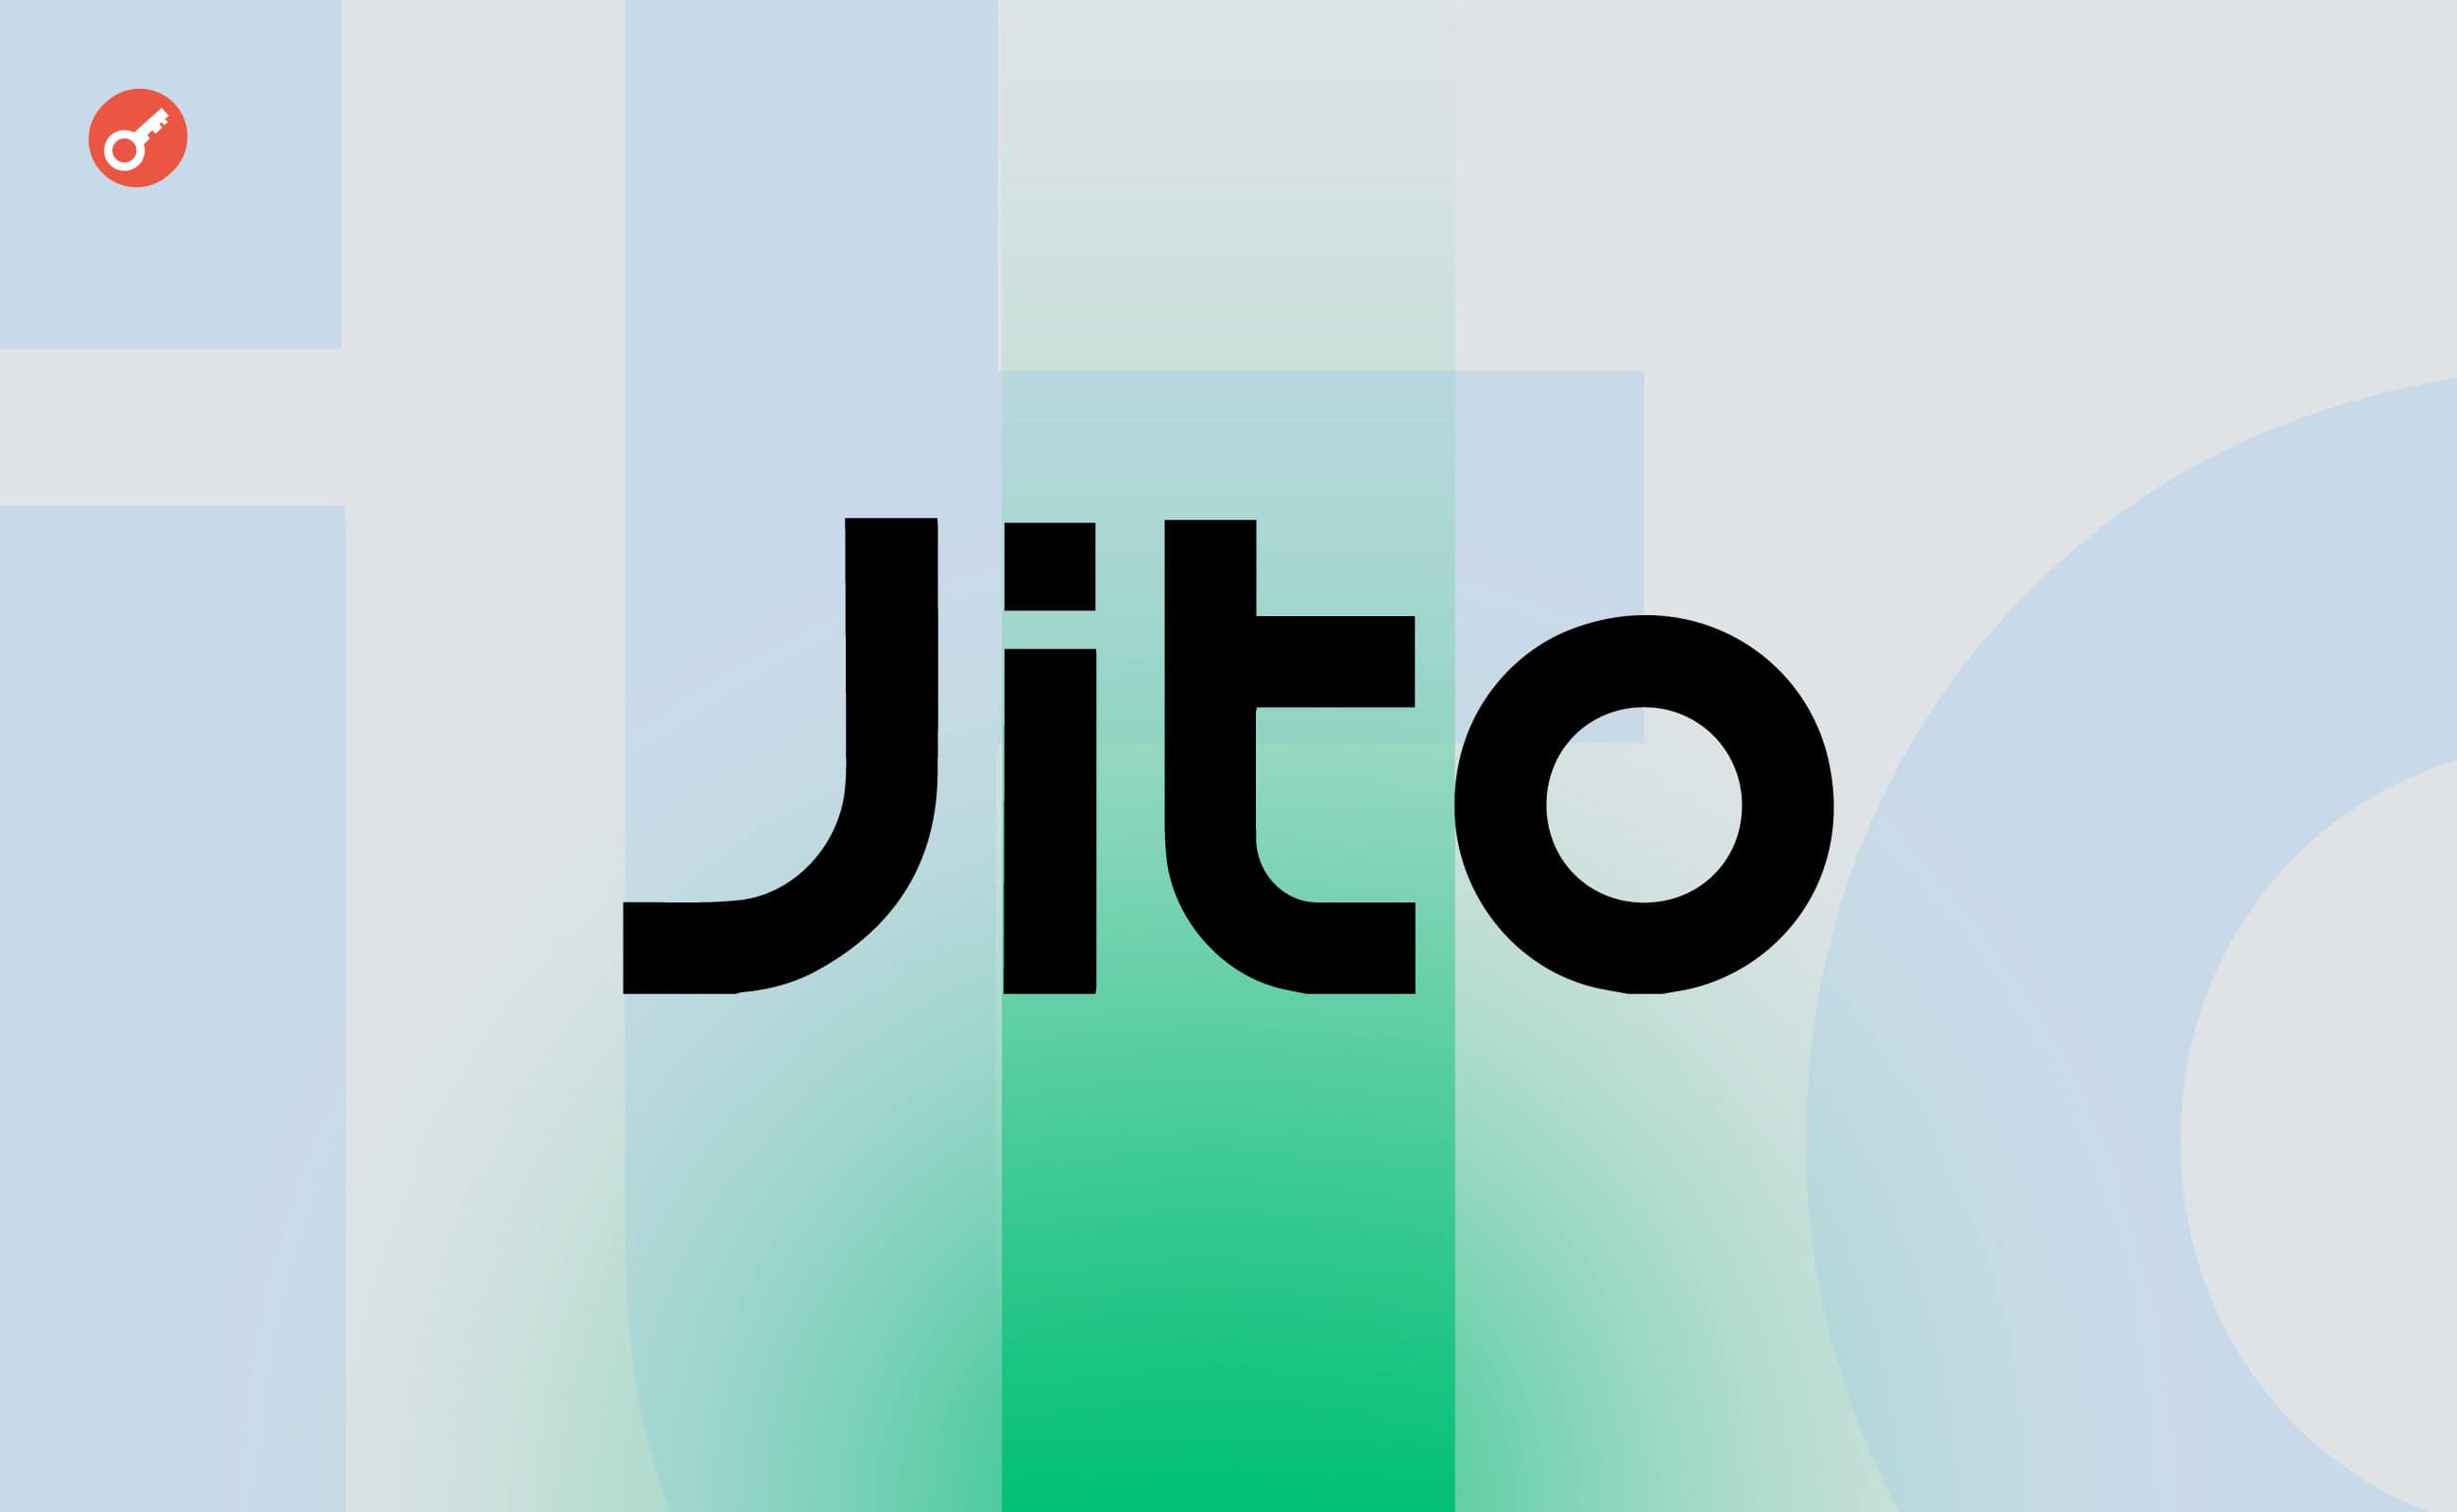 Jito стал крупнейшим DeFi-протоколом на Solana с $1,41 млрд TVL. Заглавный коллаж новости.